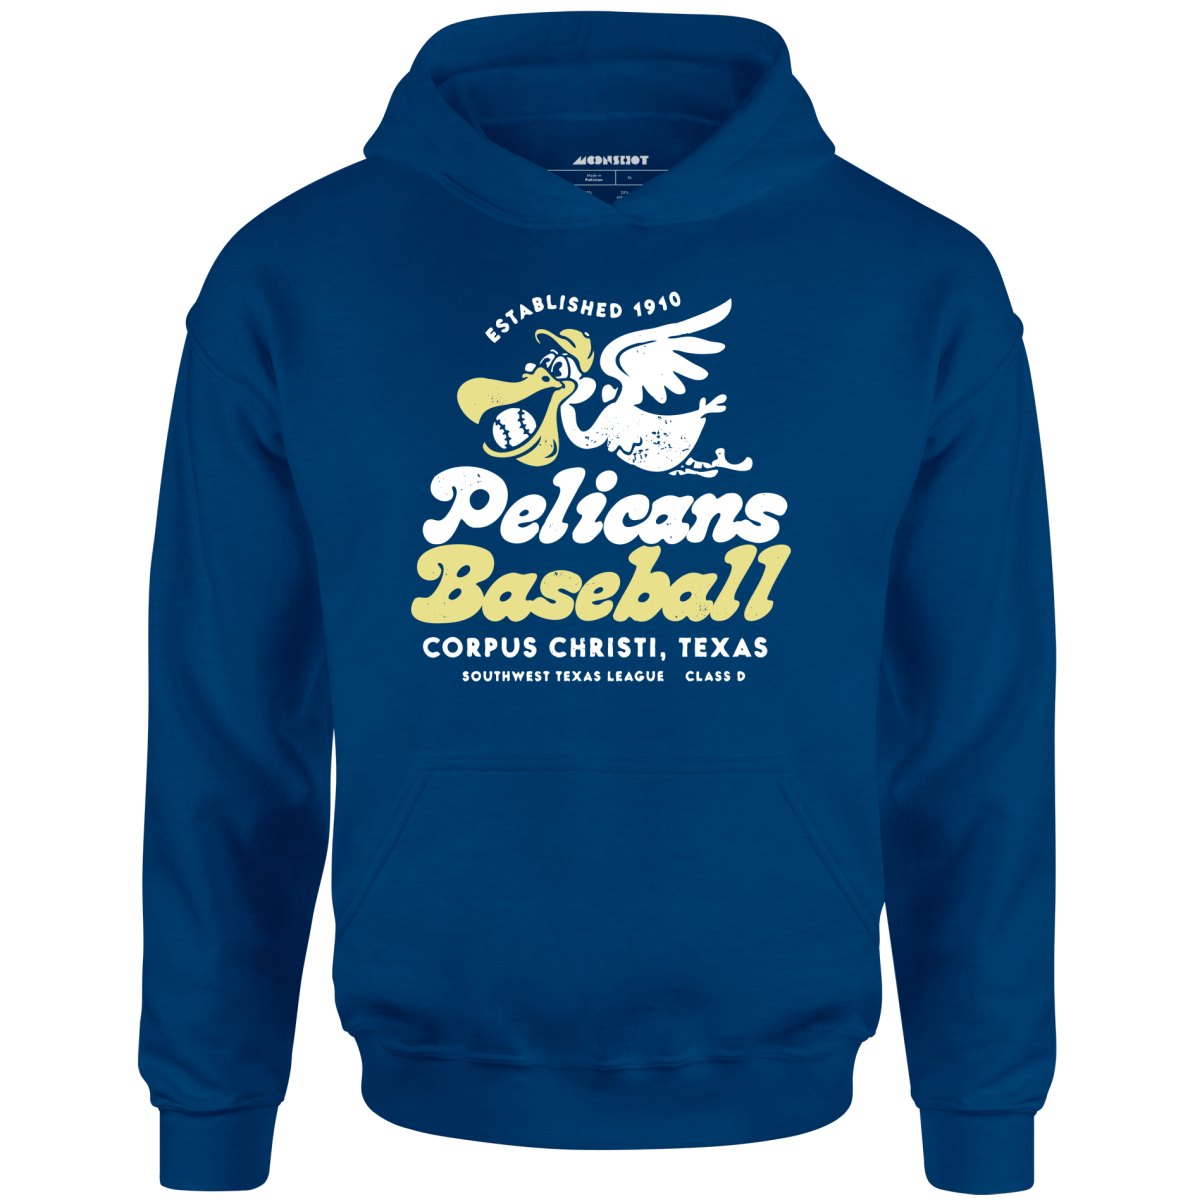 Corpus Christi Pelicans - Texas - Vintage Defunct Baseball Teams - Unisex Hoodie